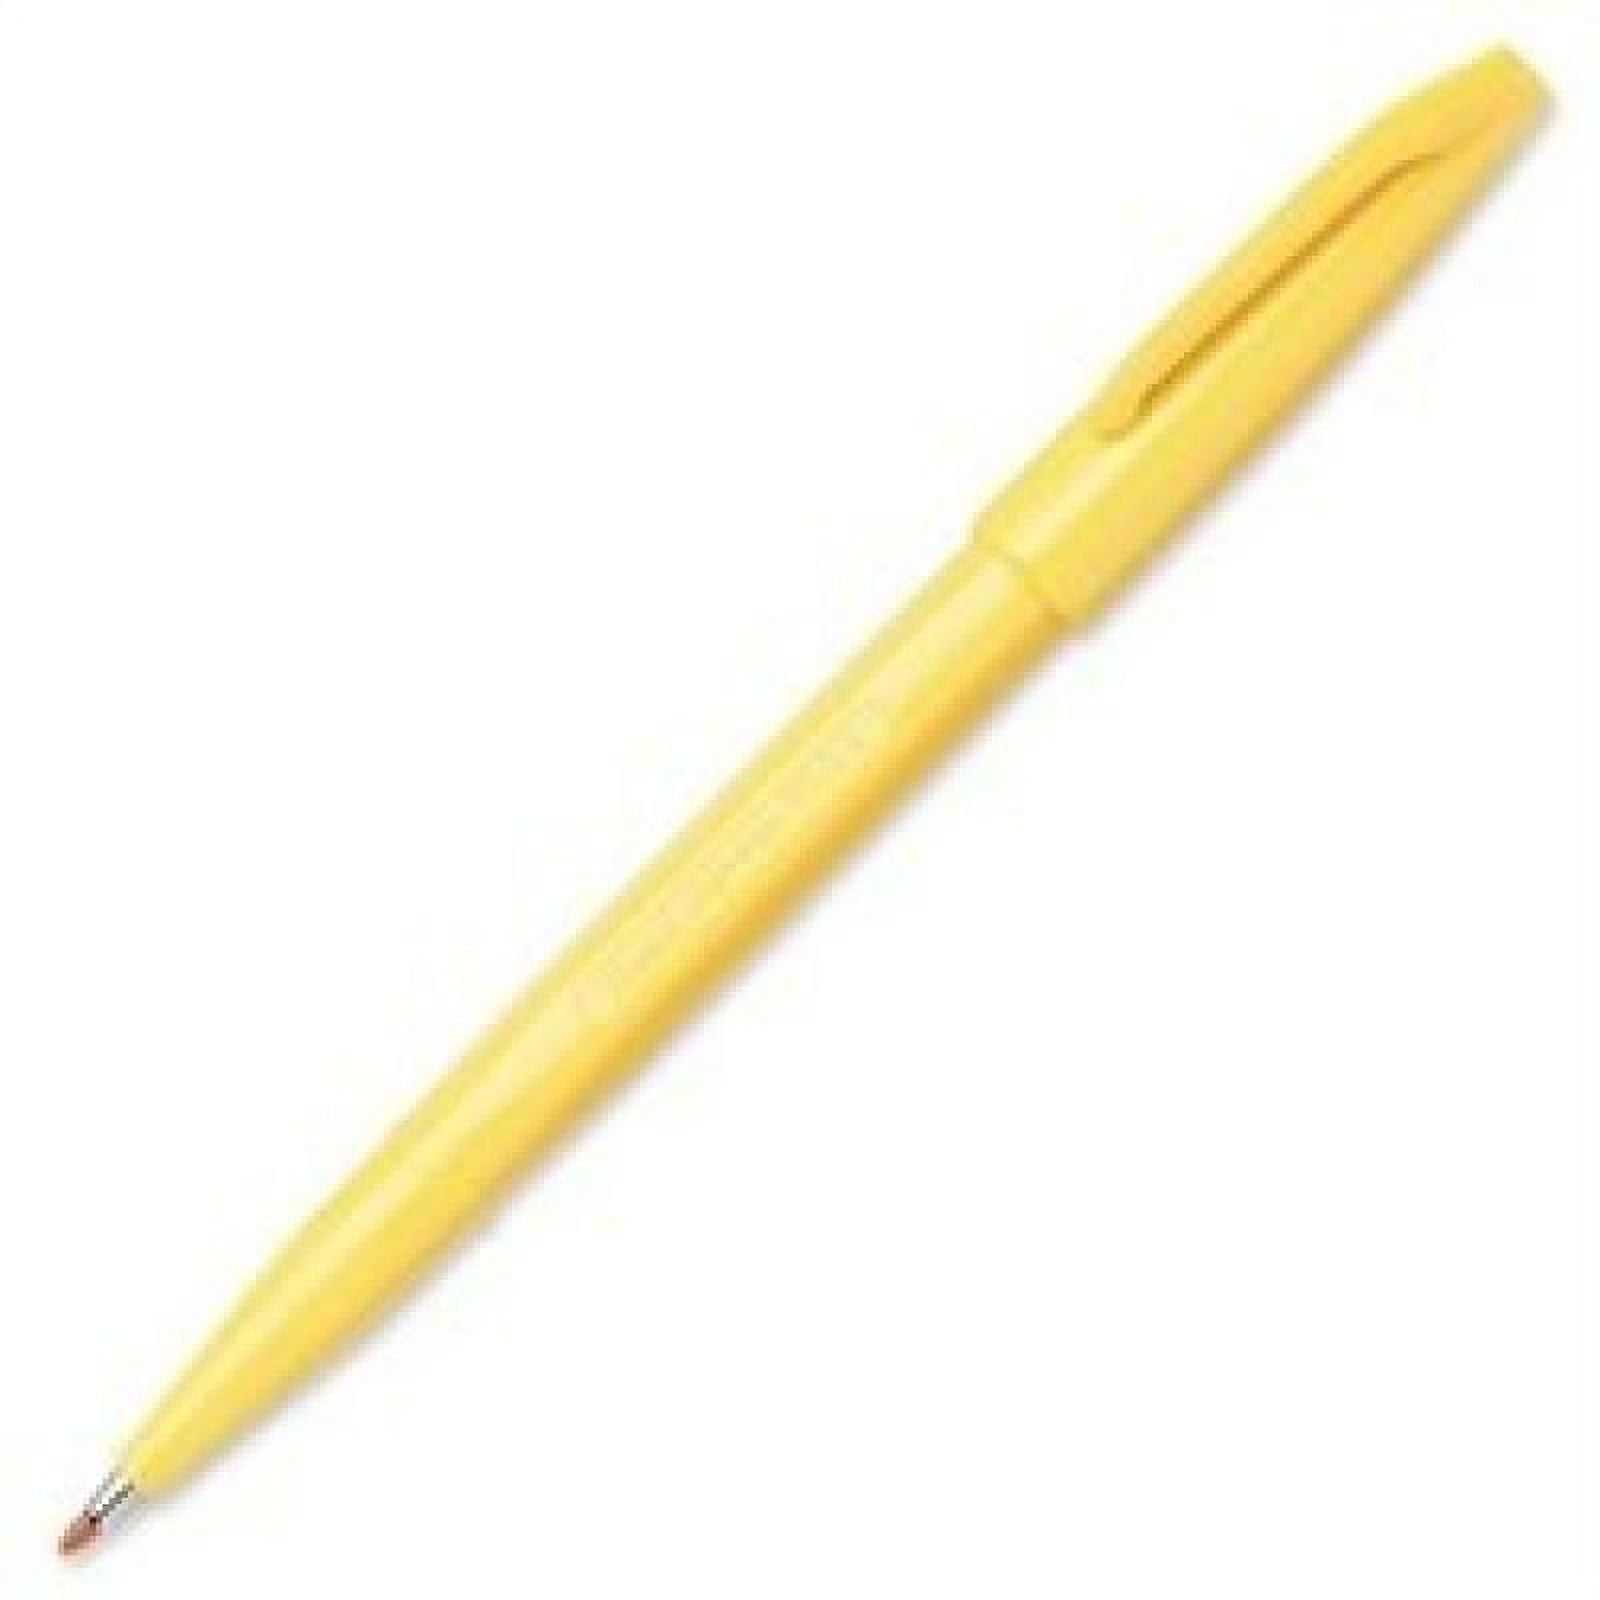 Lelix Felt Tip Pens, 30 Purple Pens, 0.7mm Medium Point Felt Pens, Felt Tip  Markers Pens for Journaling, Writing, Note Taking, Planner, Perfect for